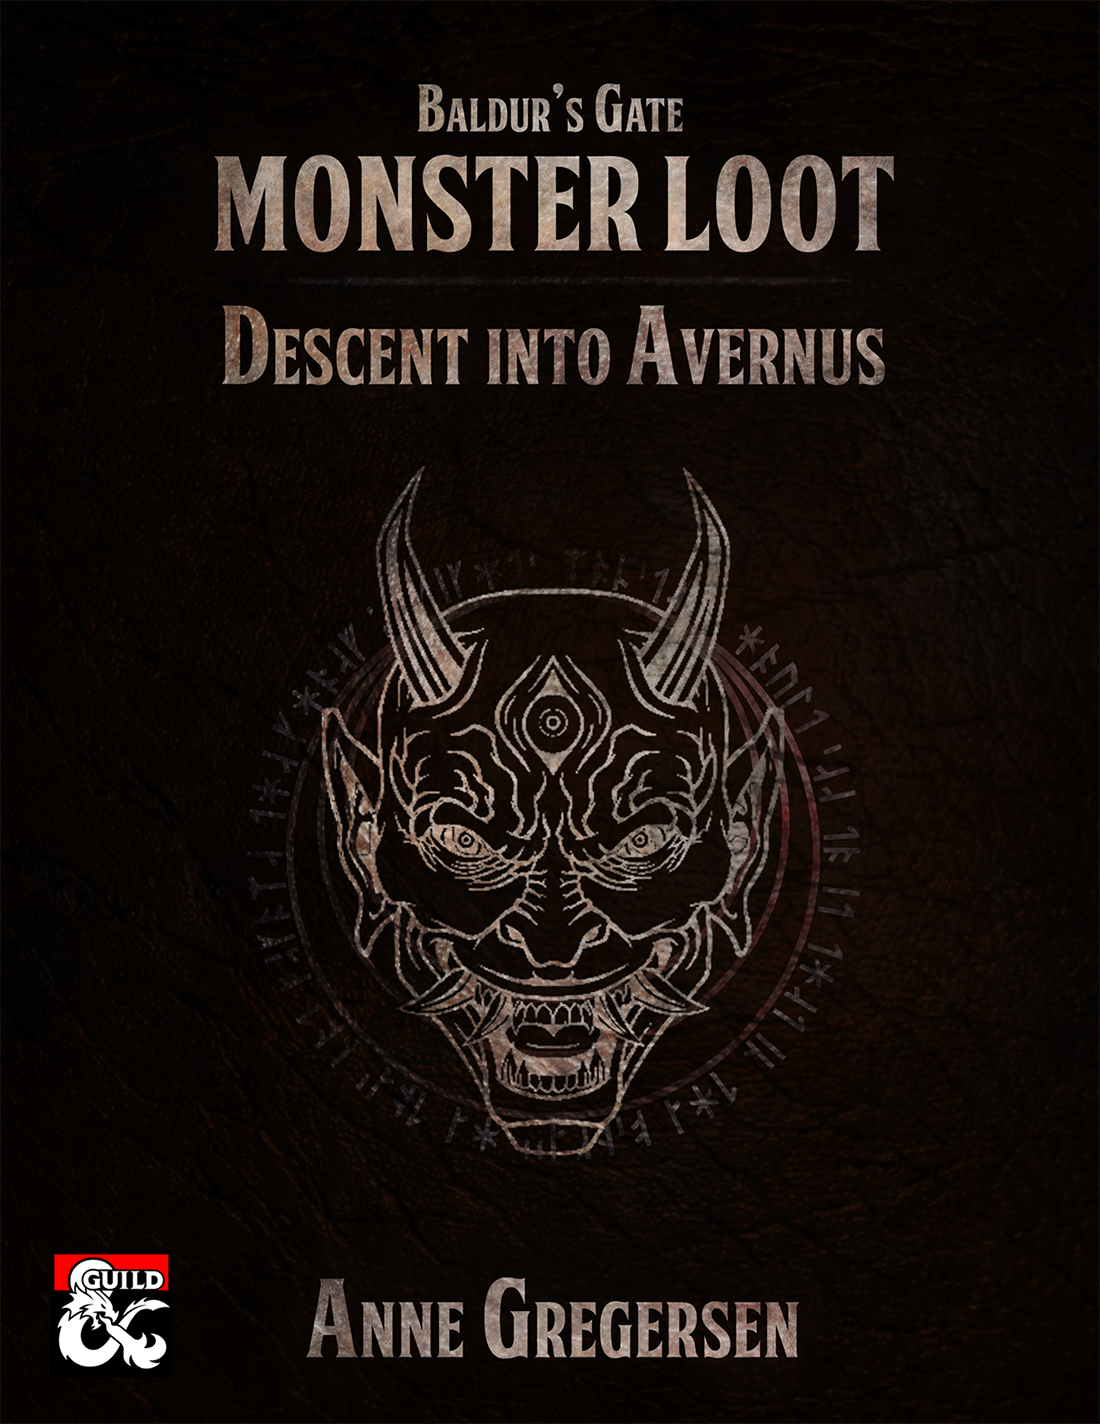 Baldur's Gate: Monster Loot - Descent Into Avernus